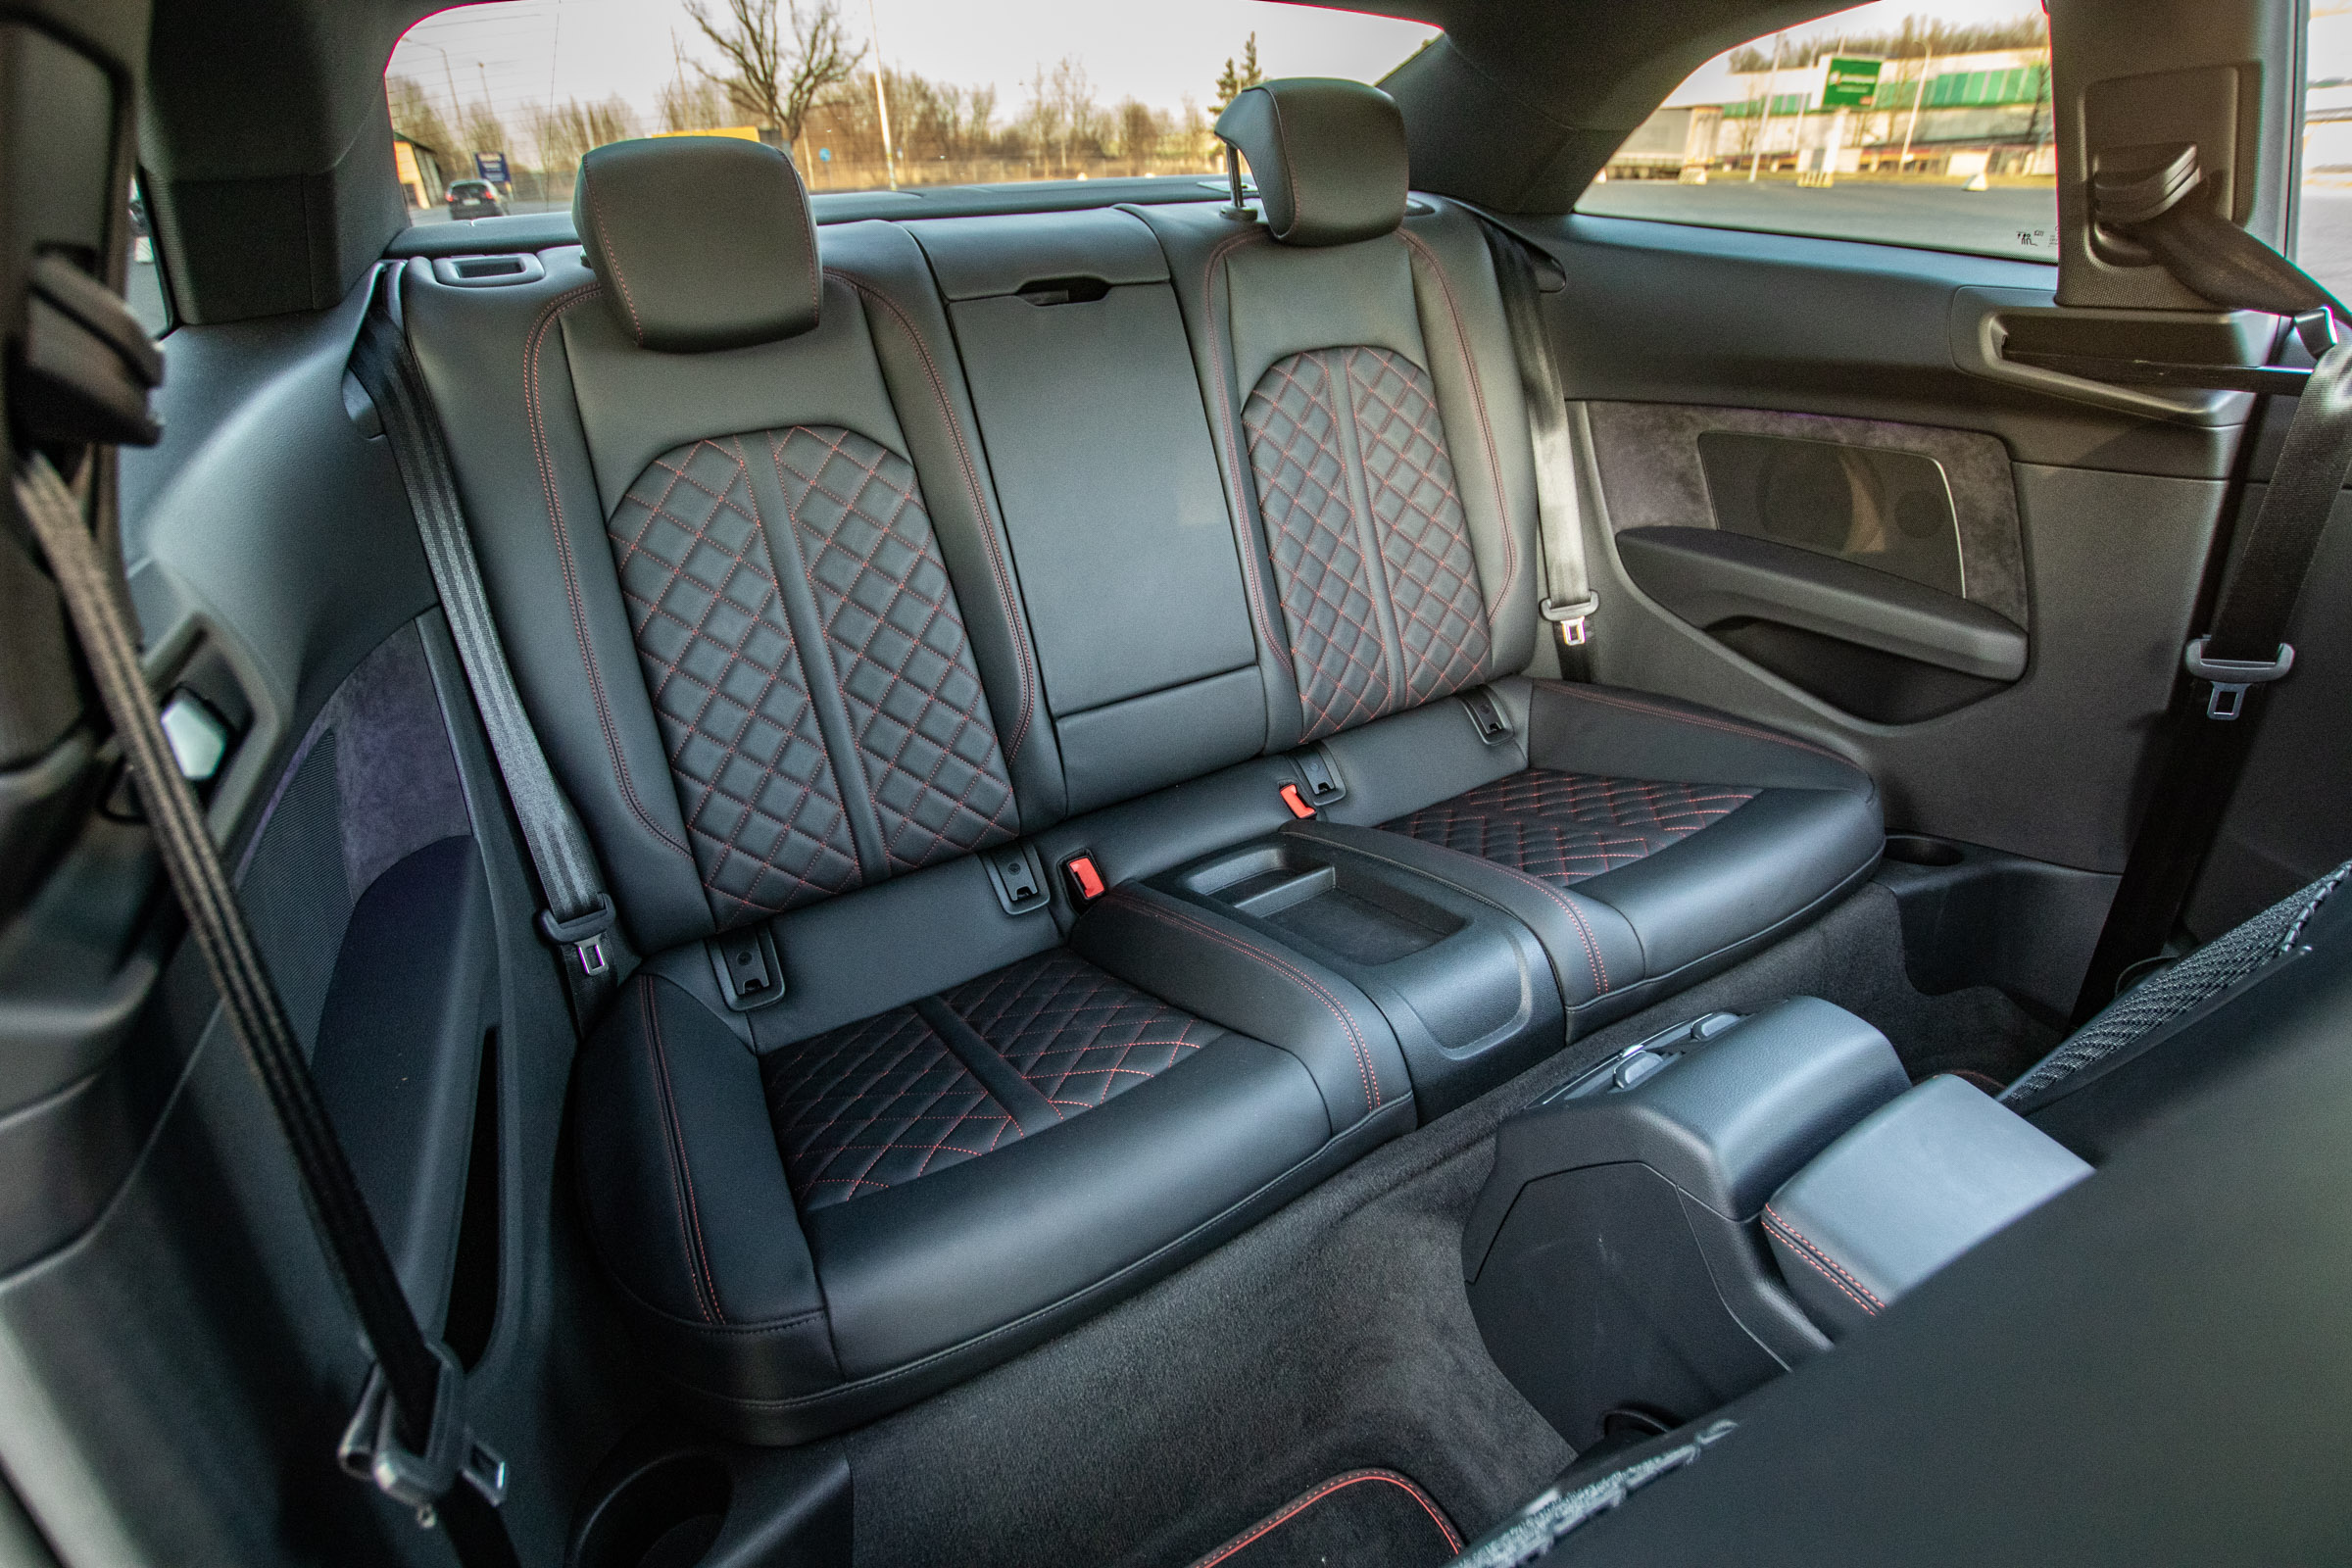 Audi A5 coupe test 2020 